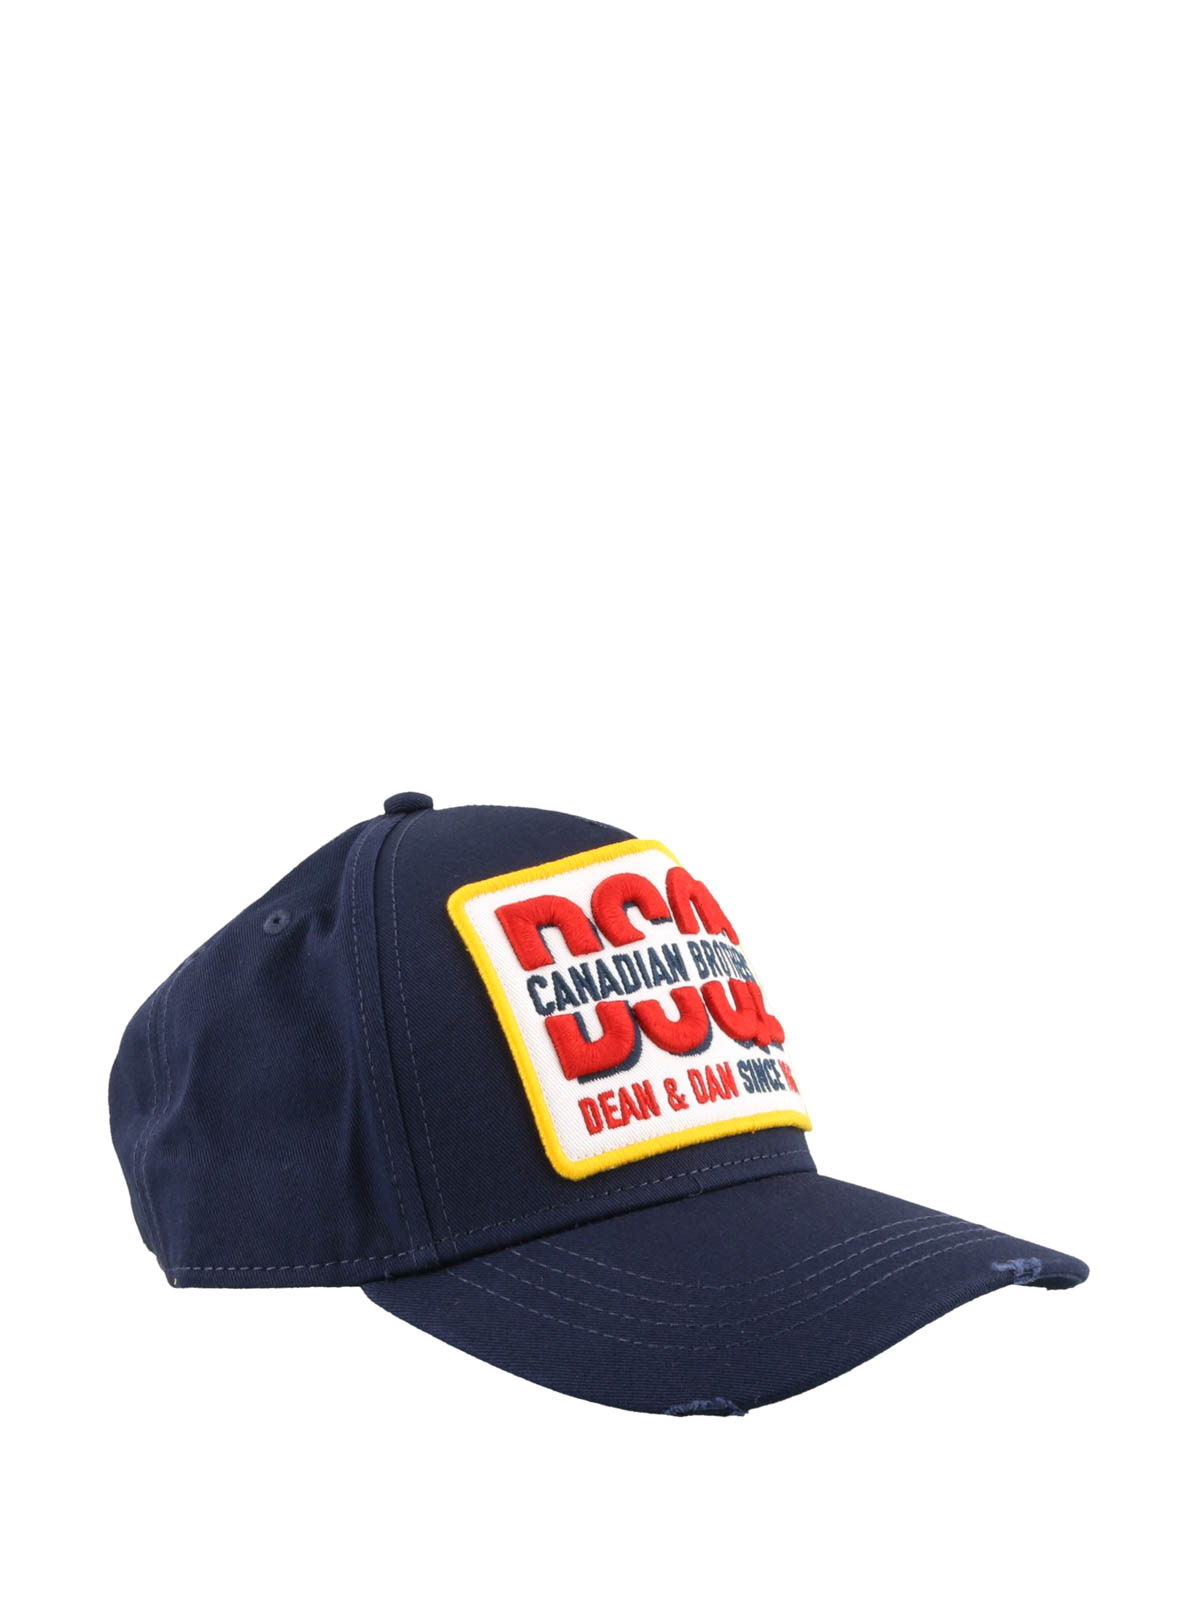 Verslaggever lenen Verniel Hats & caps Dsquared2 - Canadian Brothers blue baseball cap -  BCM019608C000013073